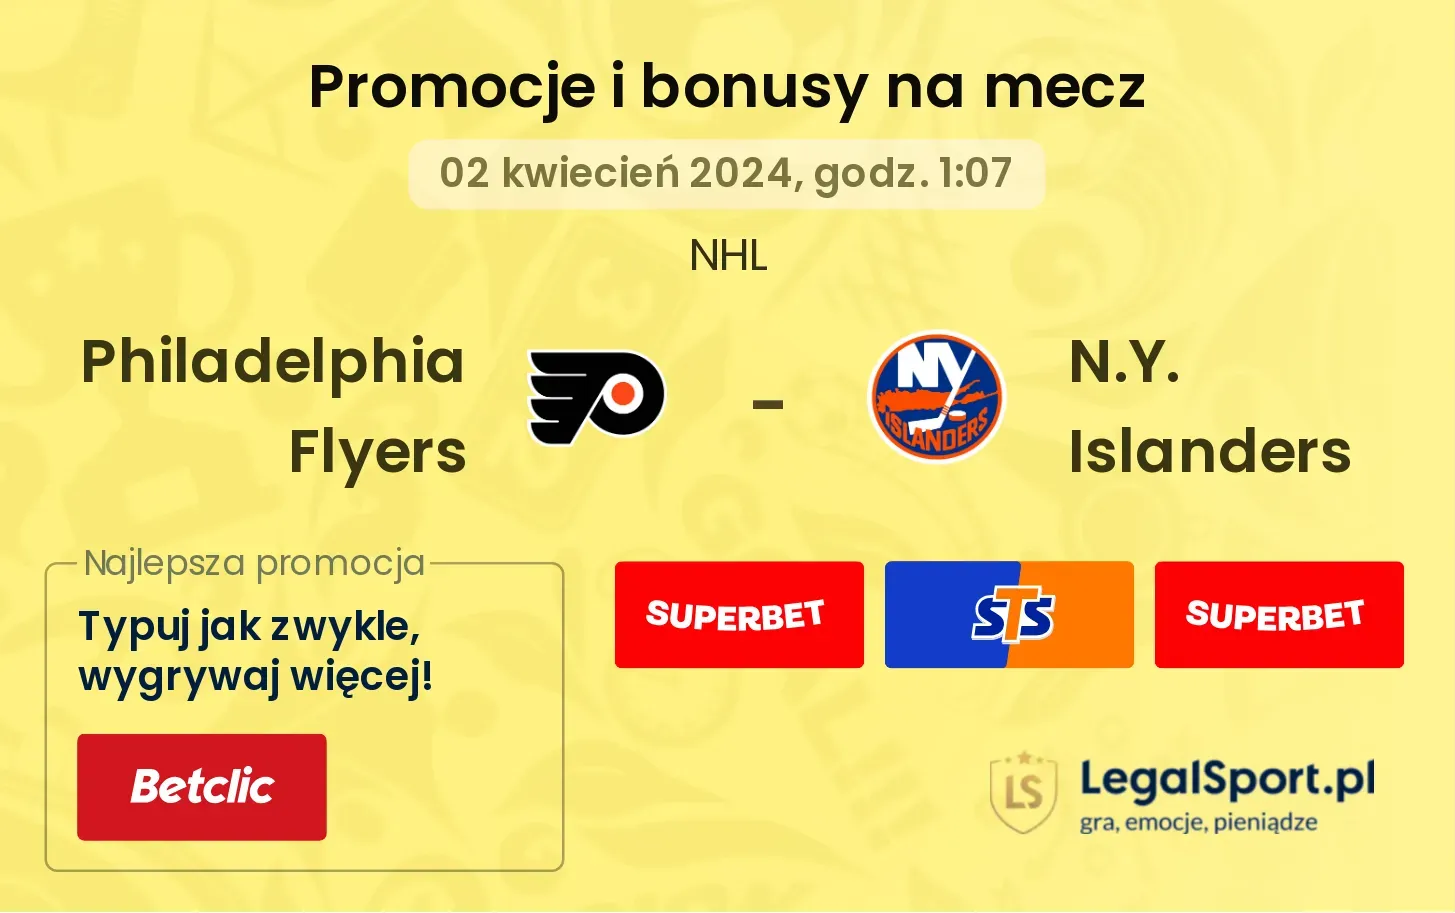 Philadelphia Flyers - N.Y. Islanders promocje bonusy na mecz